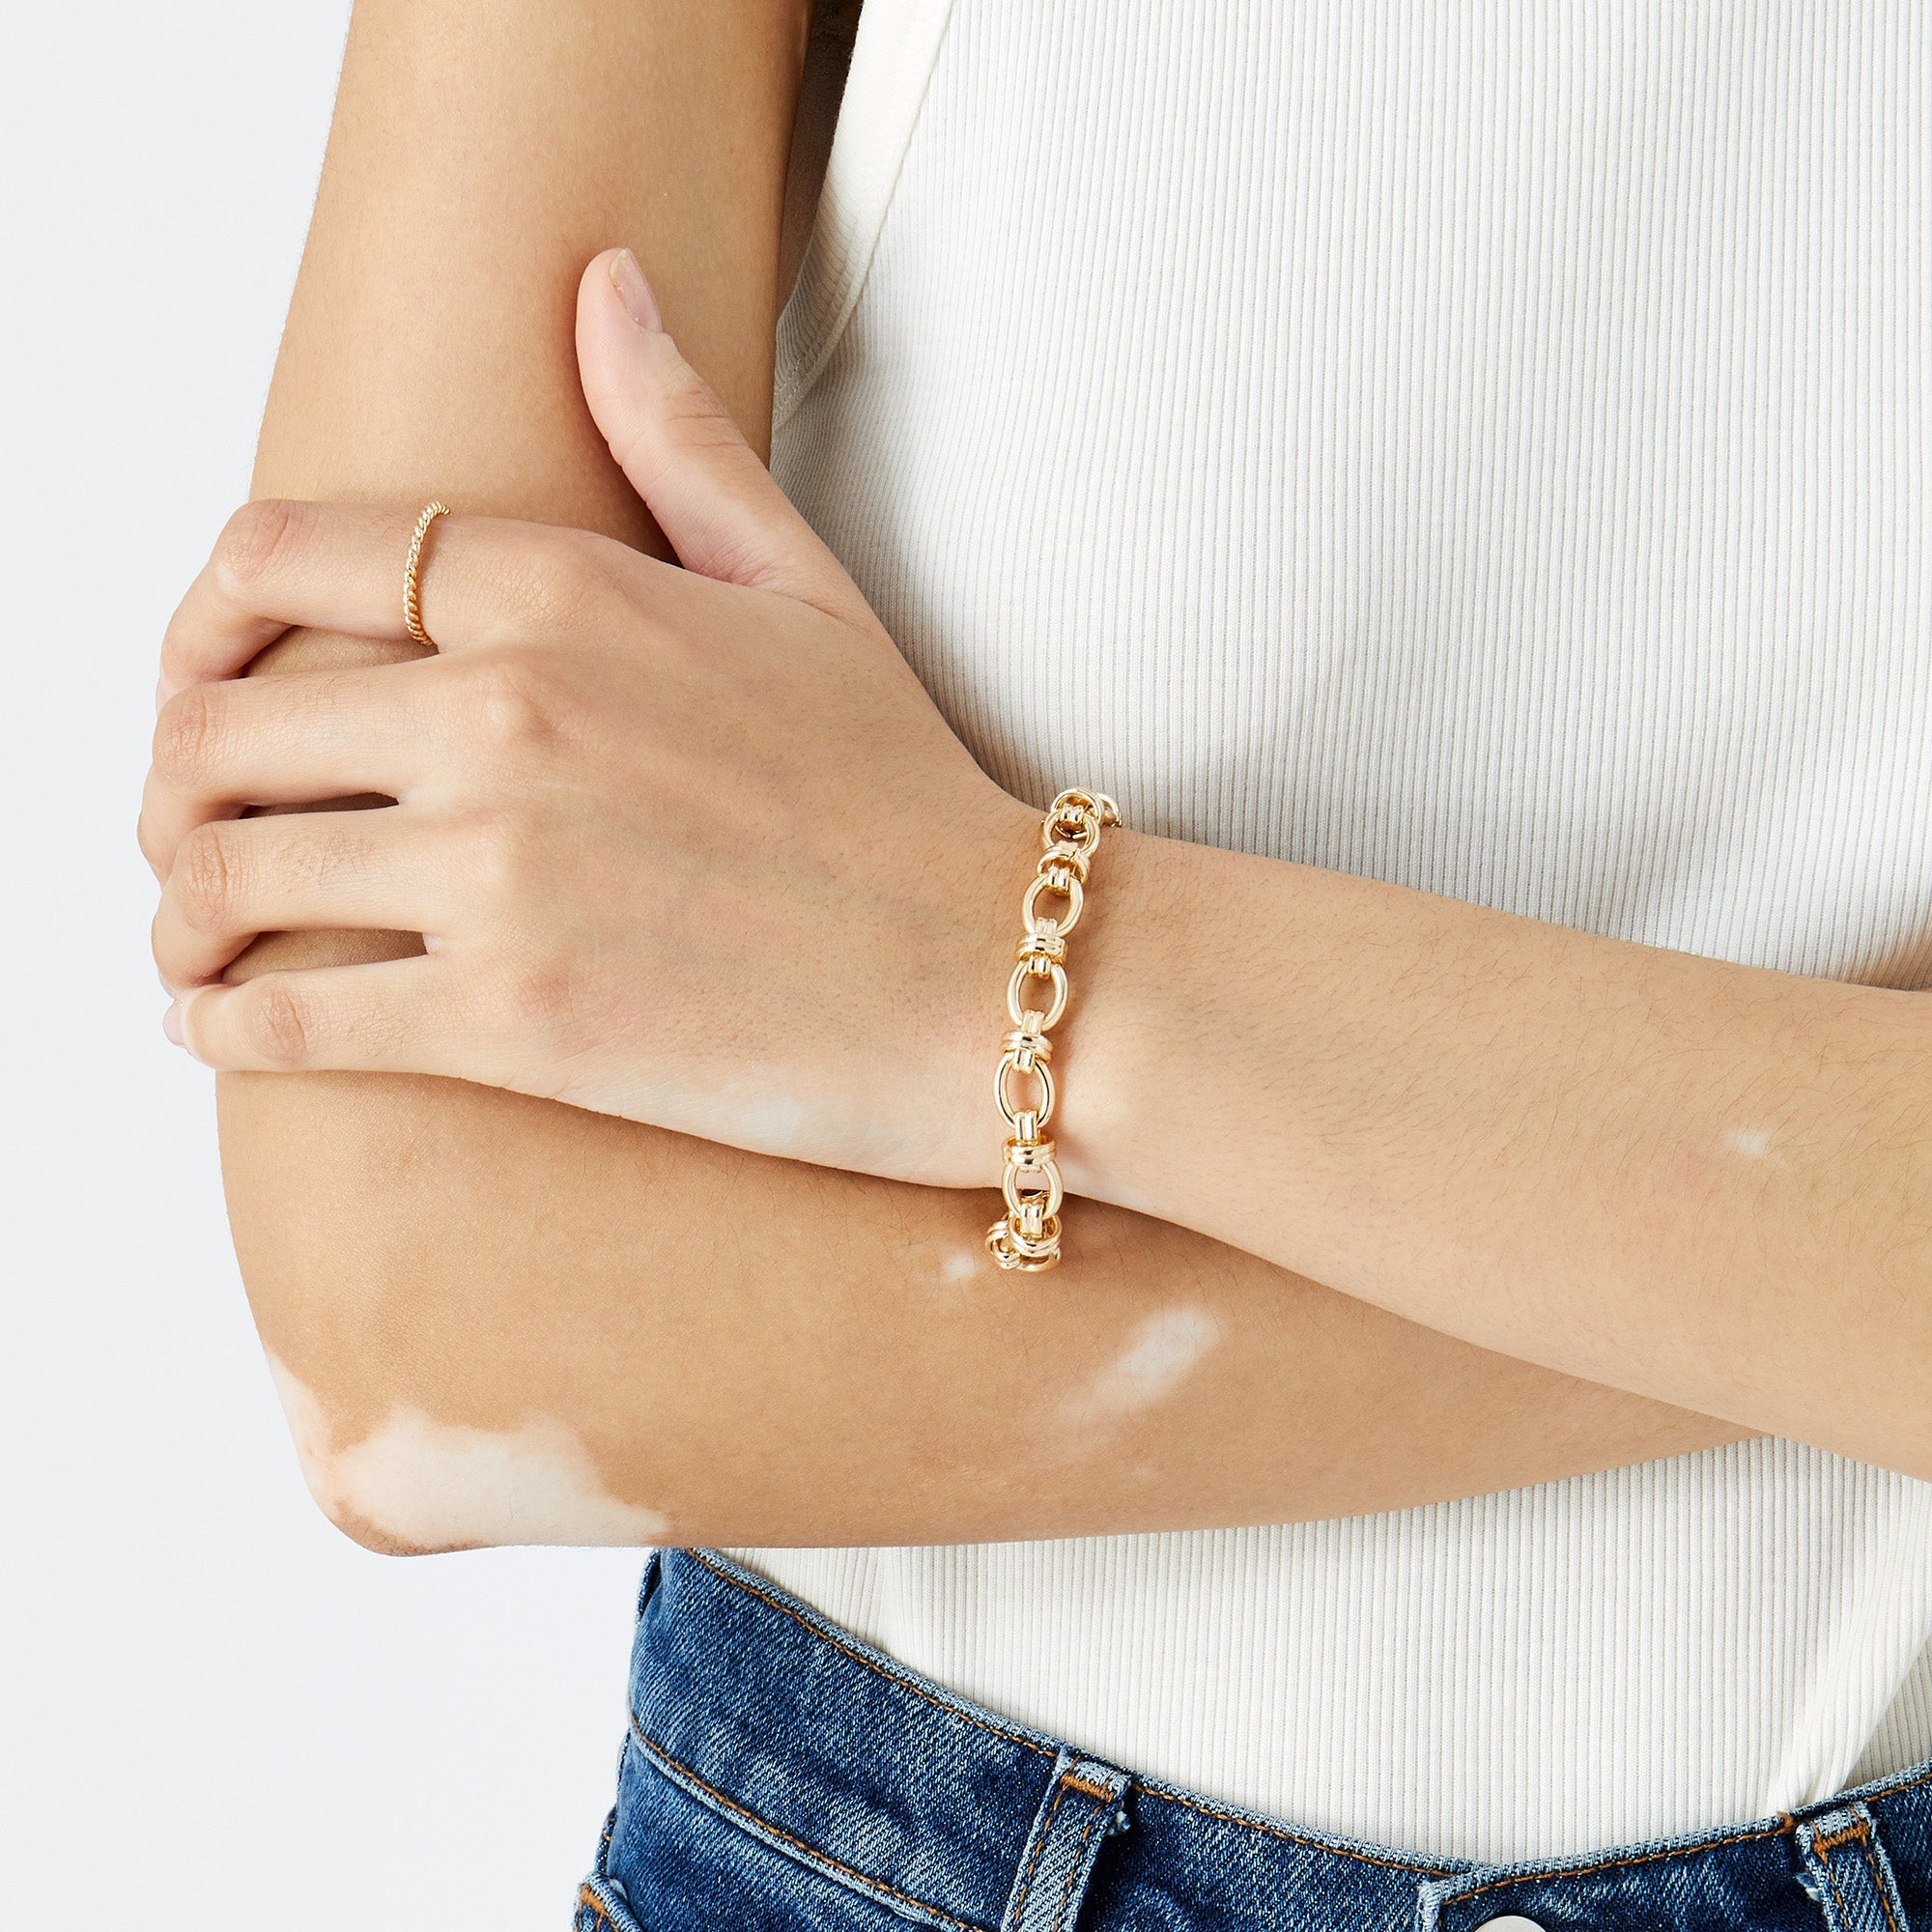 Accessorize London Women'S Gold Links & Chunky Clasp Bracelet